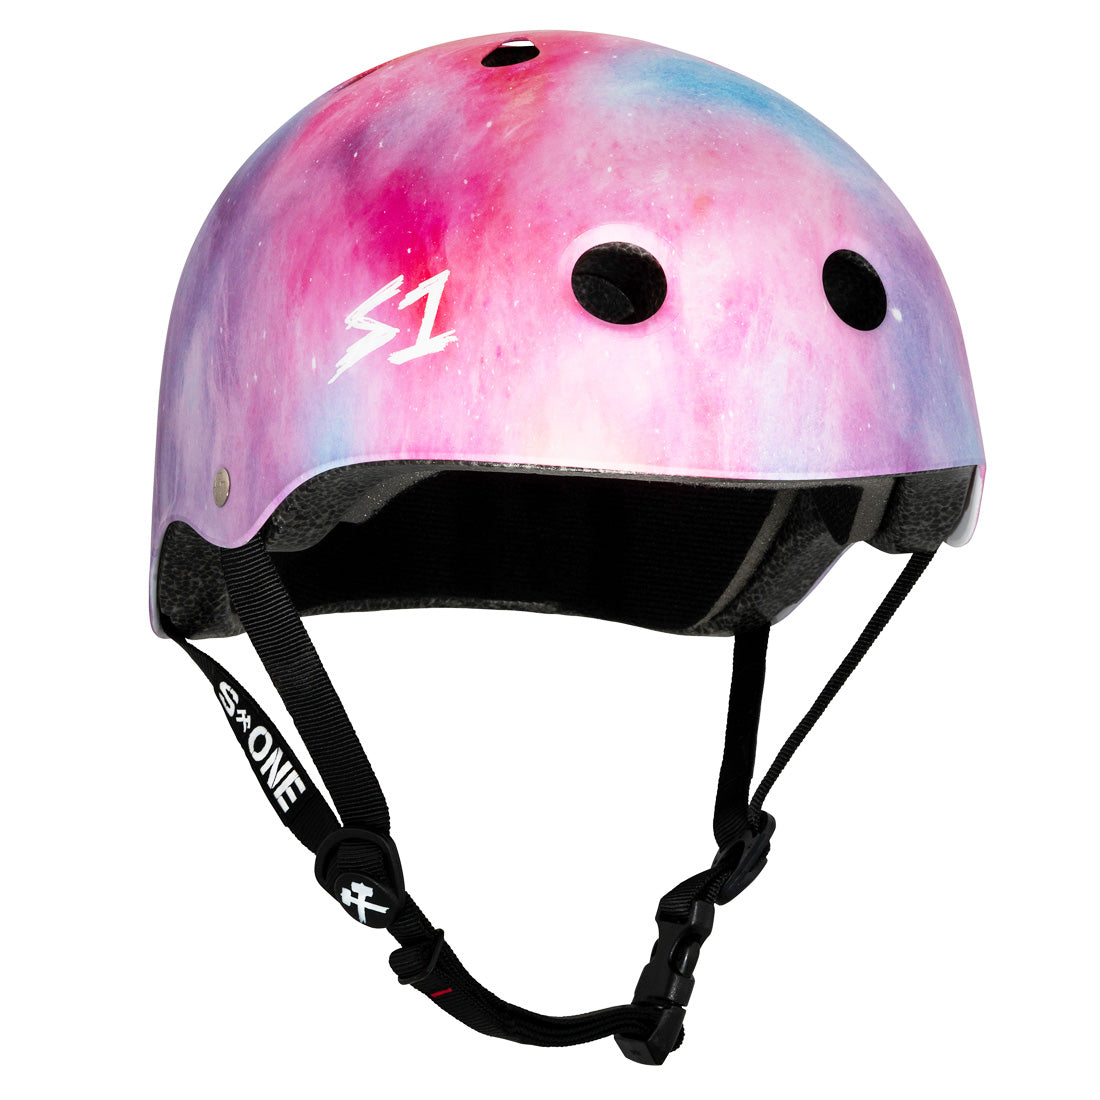 S-One Lifer Helmet - Cotton Candy Matte Helmets